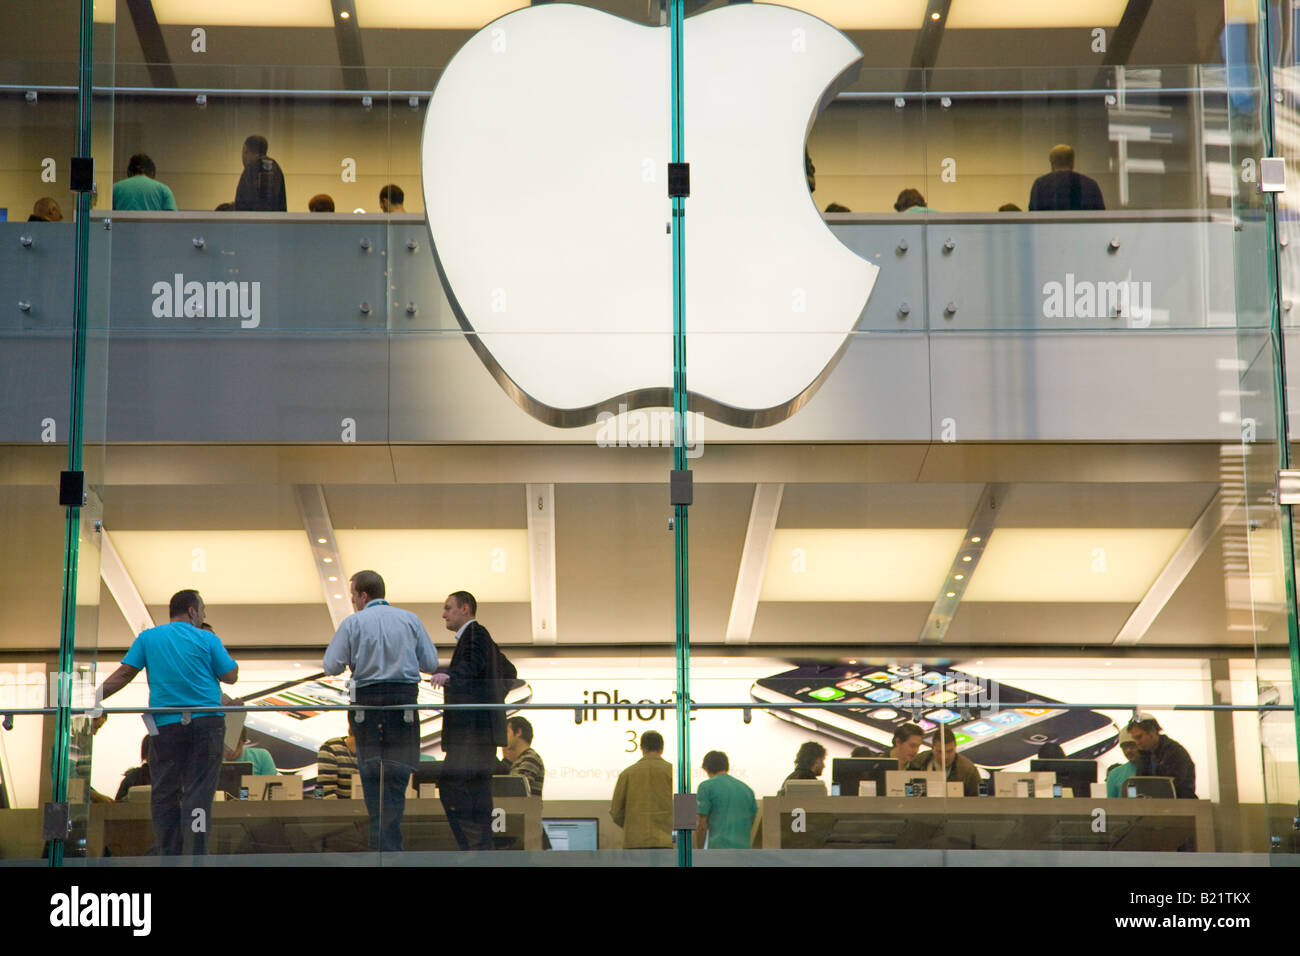 apple store sydney Stock Photo